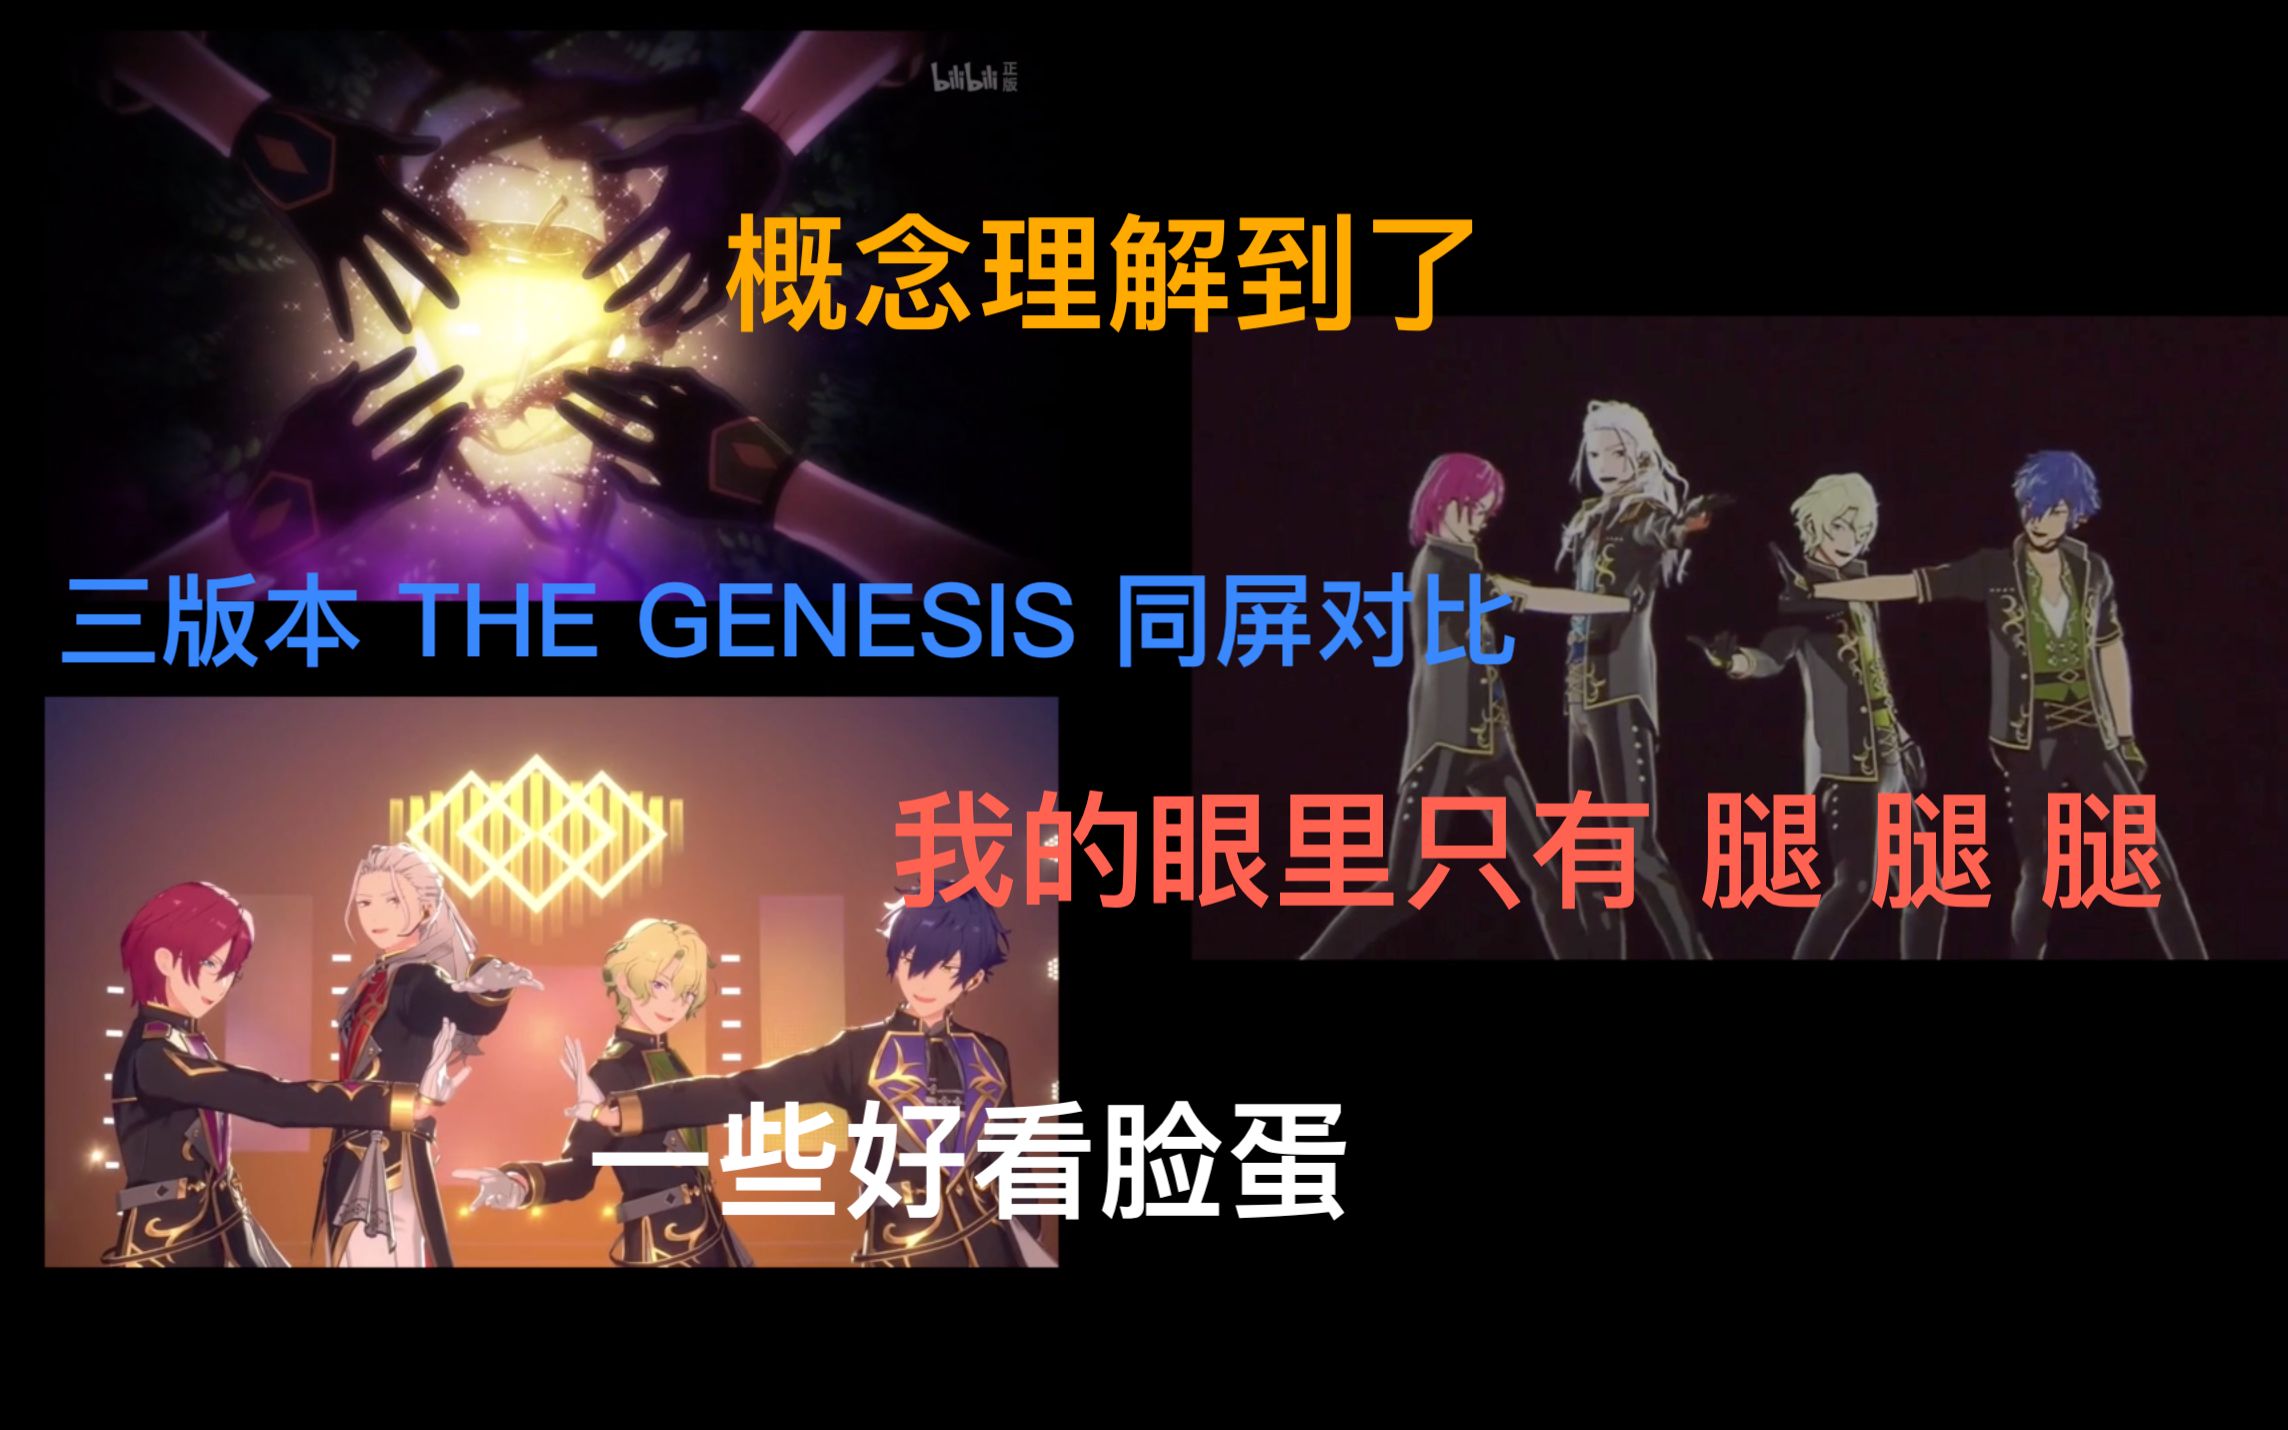 【ES || Eden】THE GENESIS三版MV同屏对比/弹幕附吐槽/创世纪真是好文明